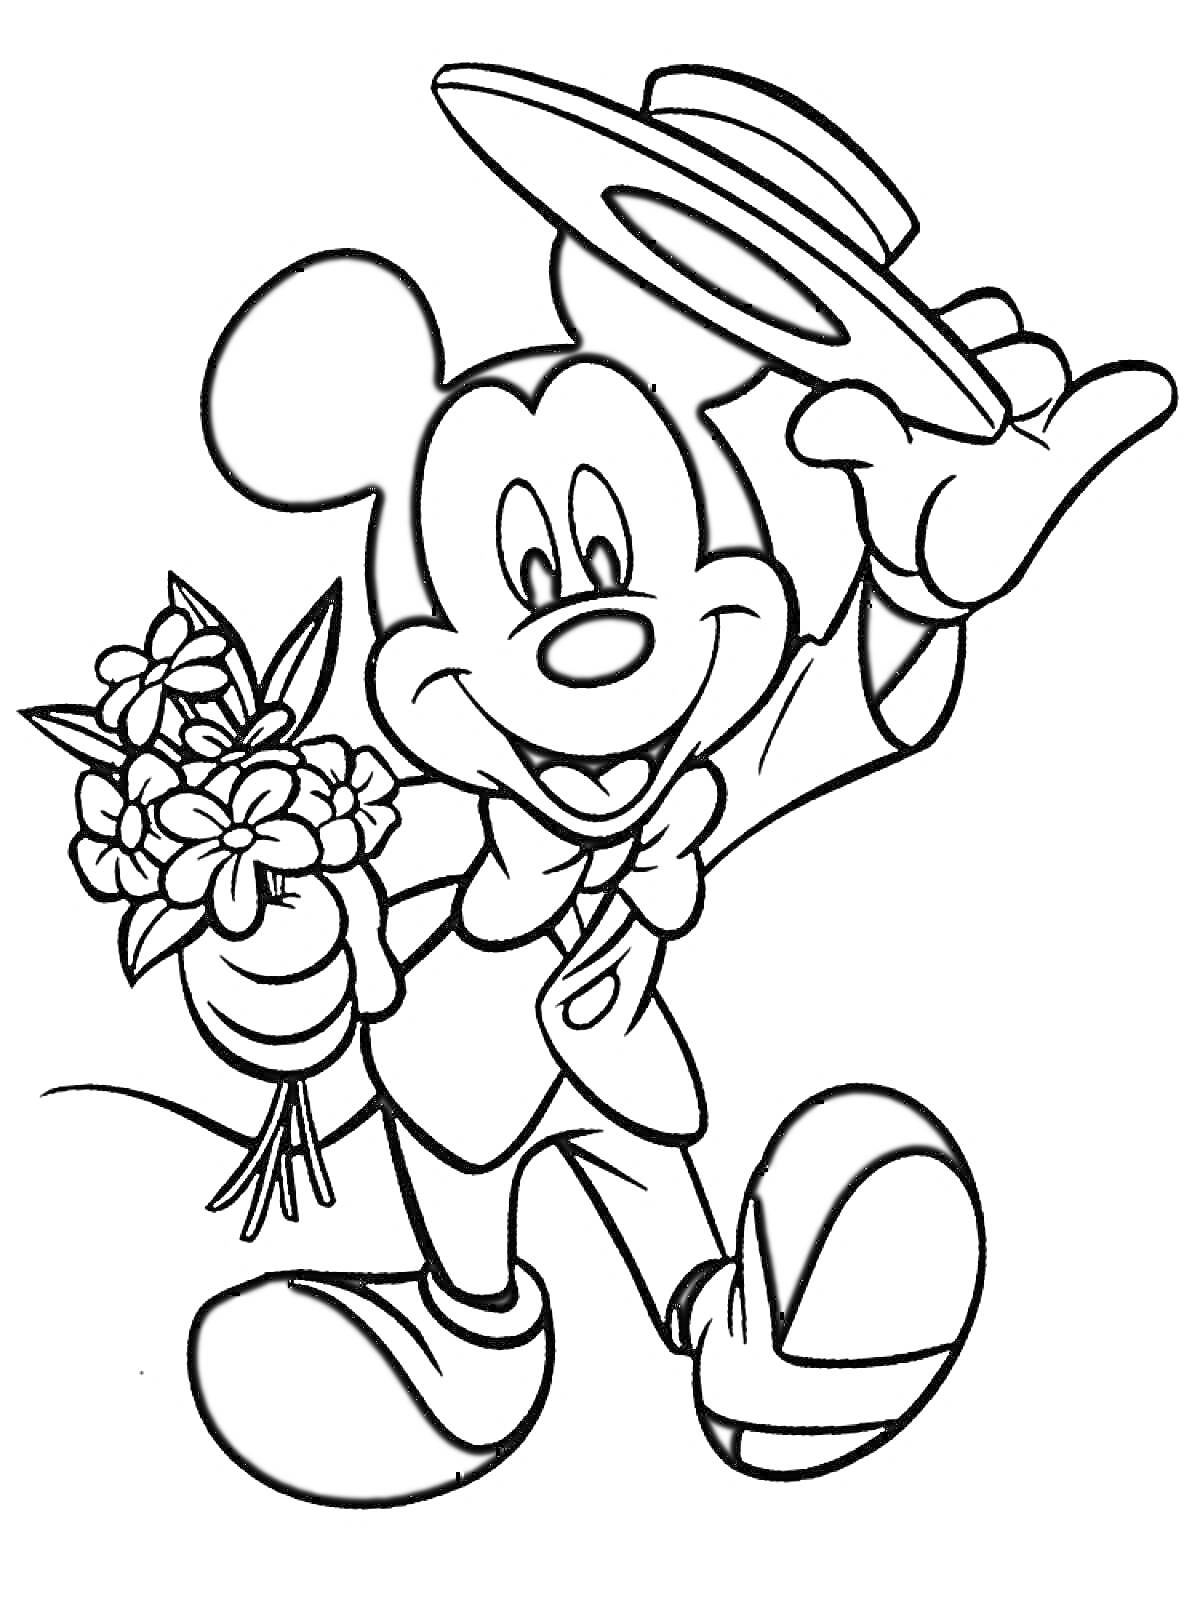 Раскраска Микки Маус в костюме с цветами и шляпой